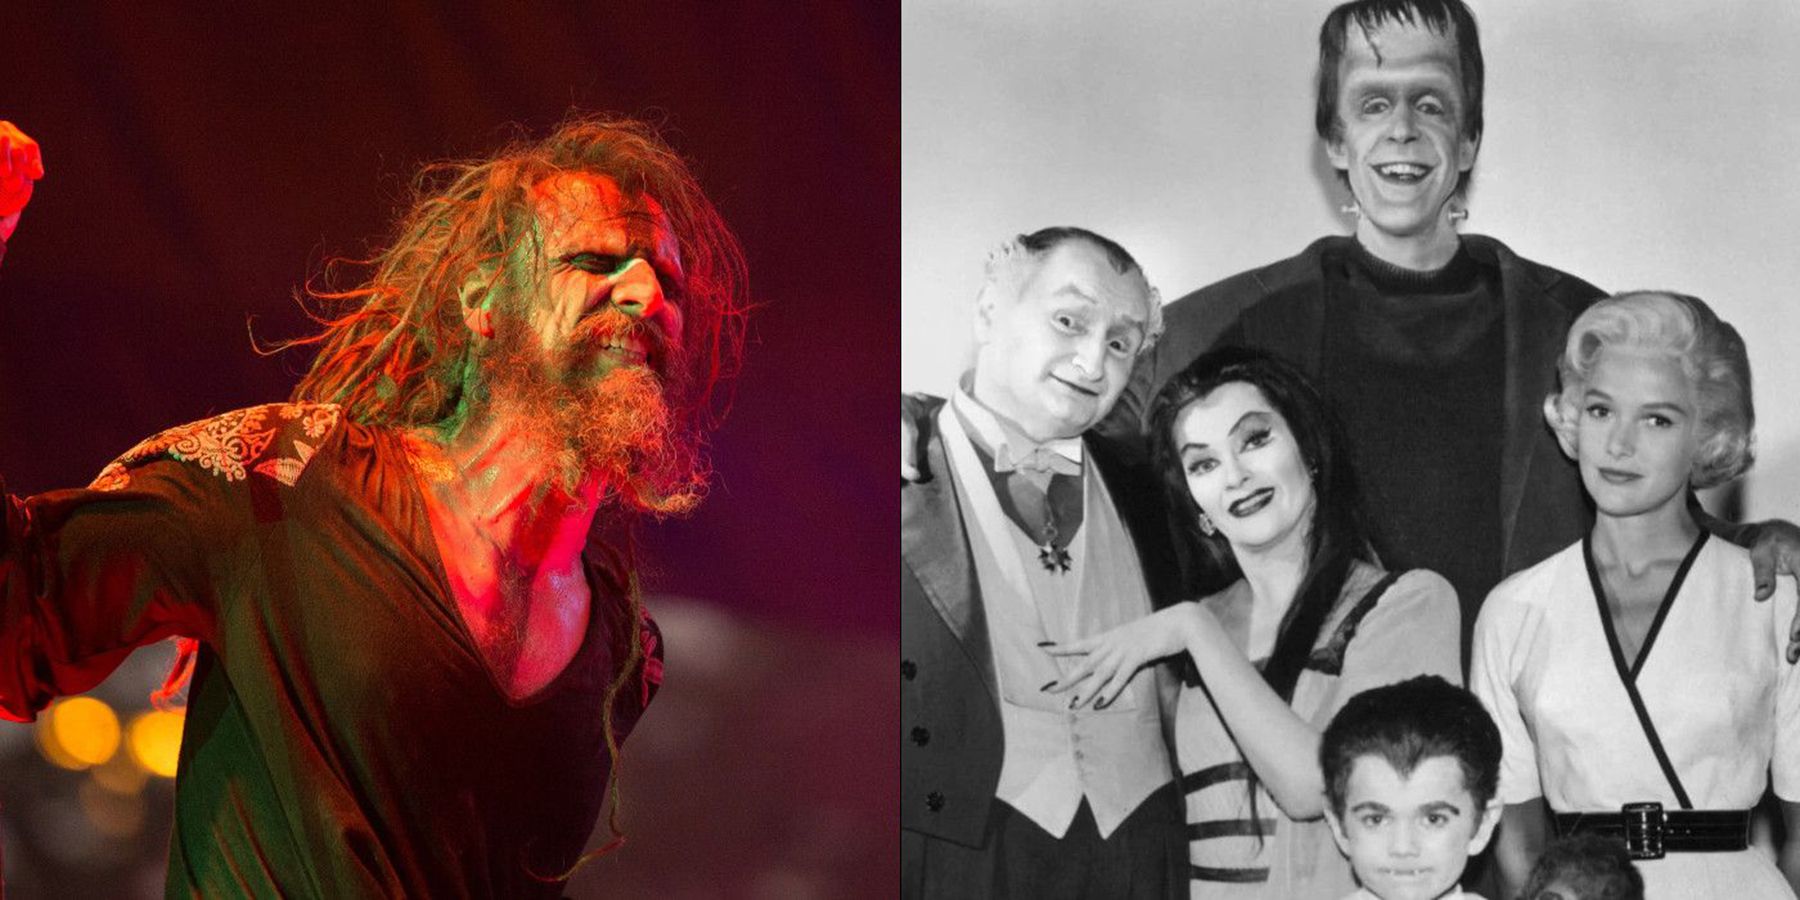 Nastavené fotografie Munsters odhalují reimagining sitcomu Rob Zombie